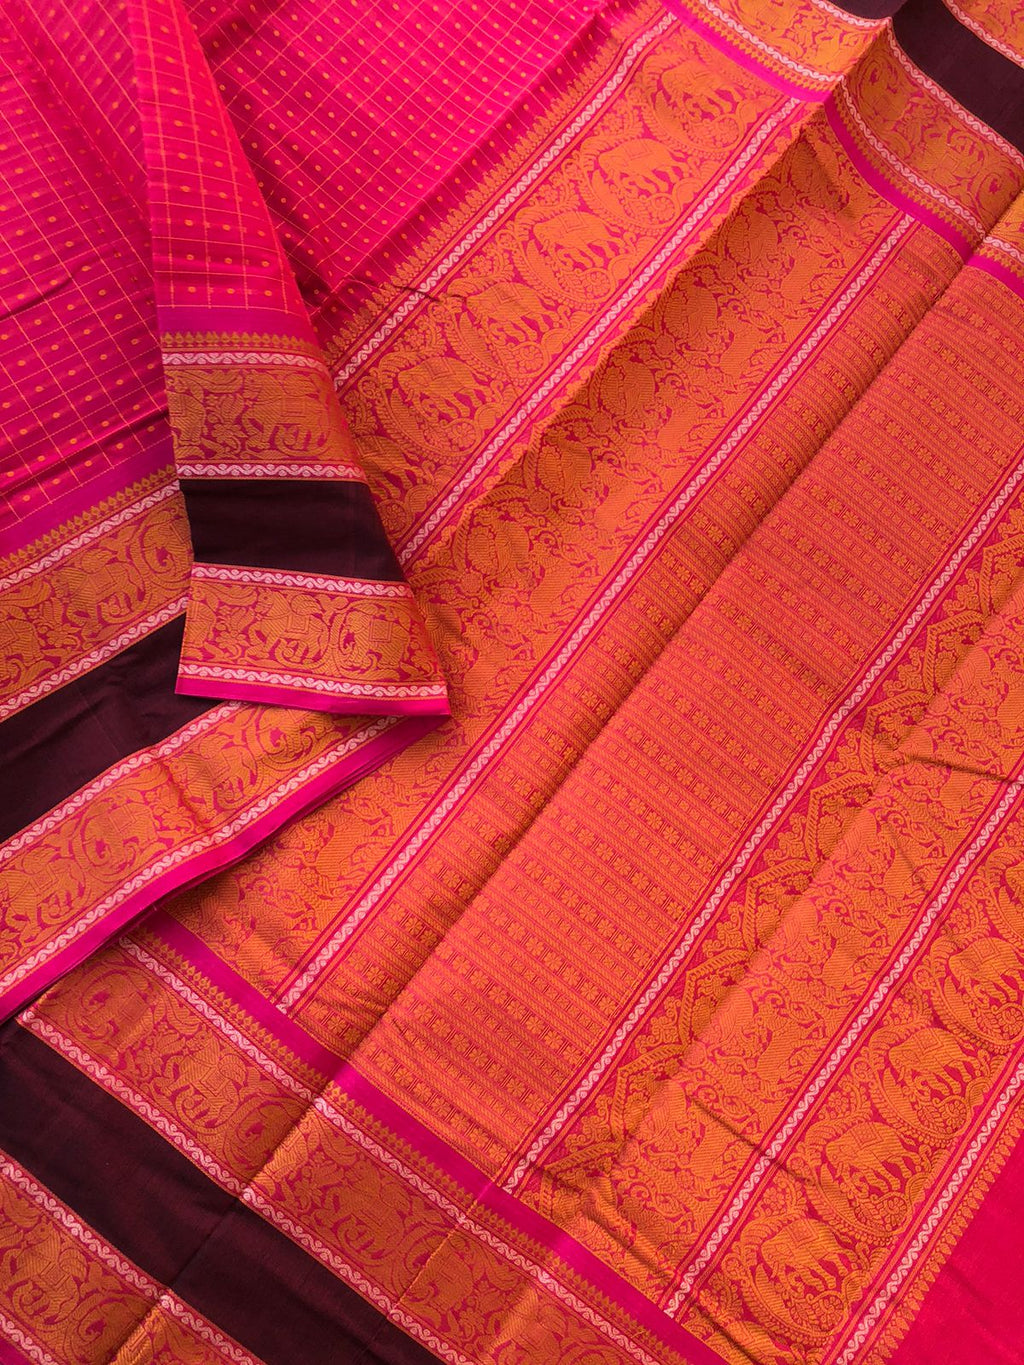 Mangalavastaram - beautiful pink red Lakshadeepam woven in mustard thread